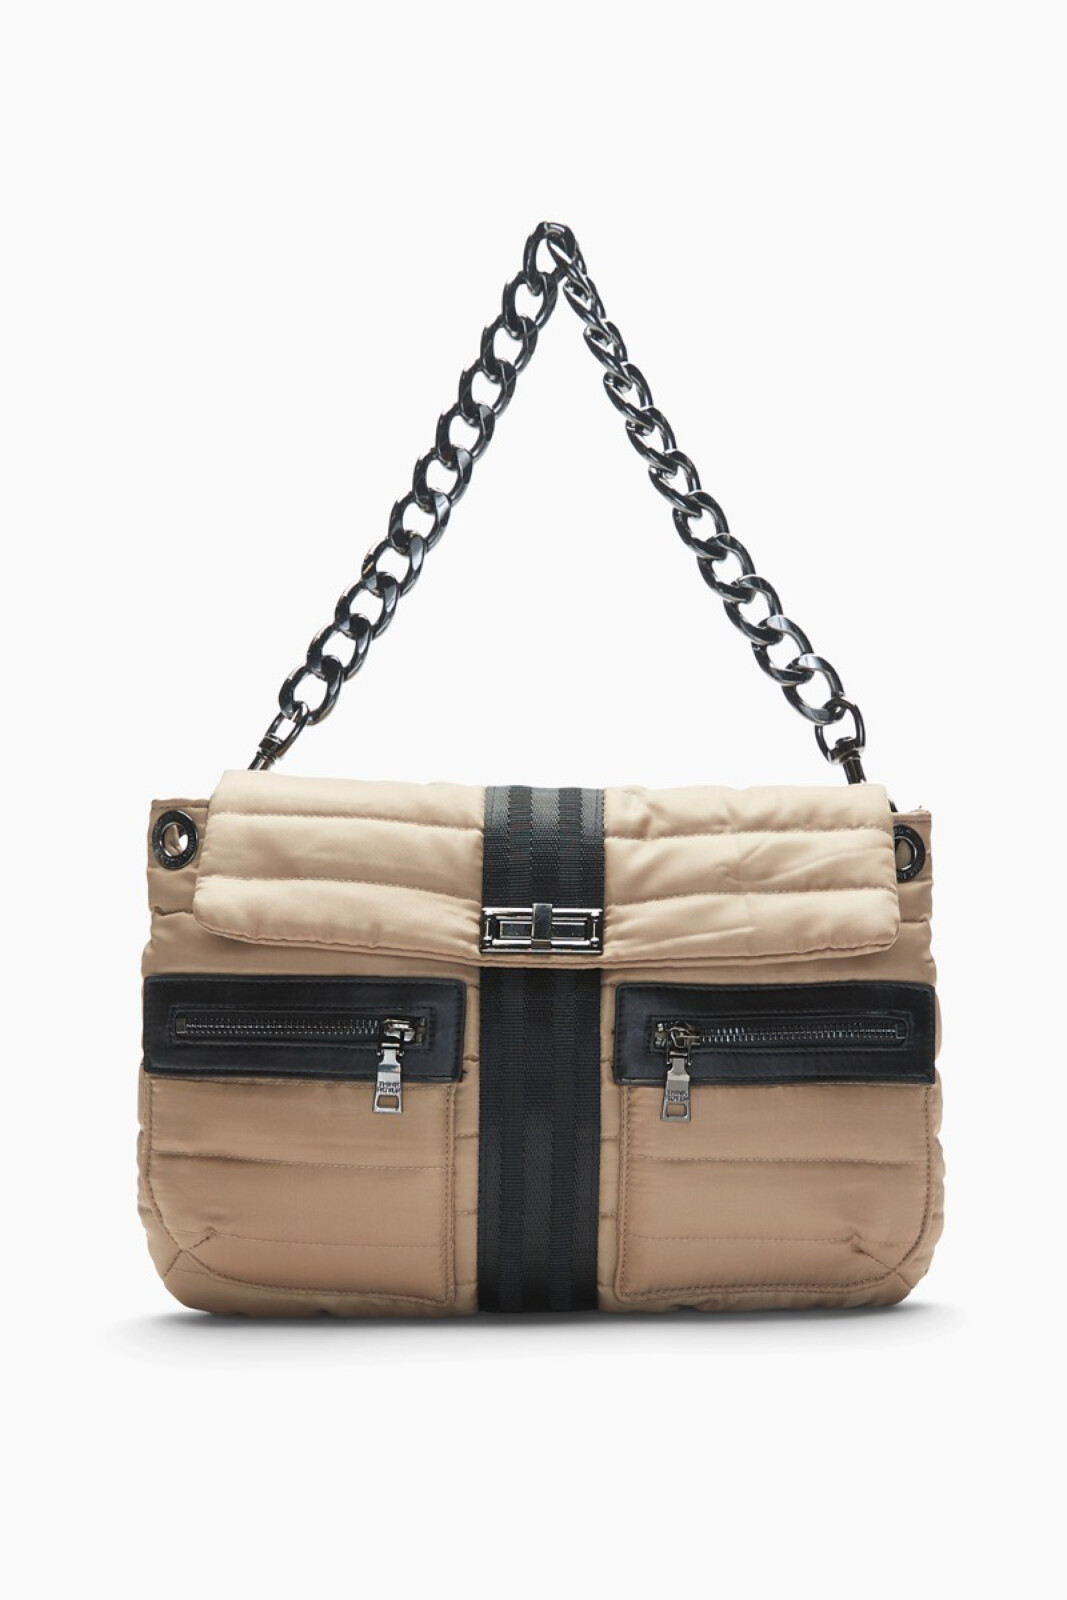 Evereve Woman's Handbags THINK ROYLN Little Runaway - Small - $118 NWT